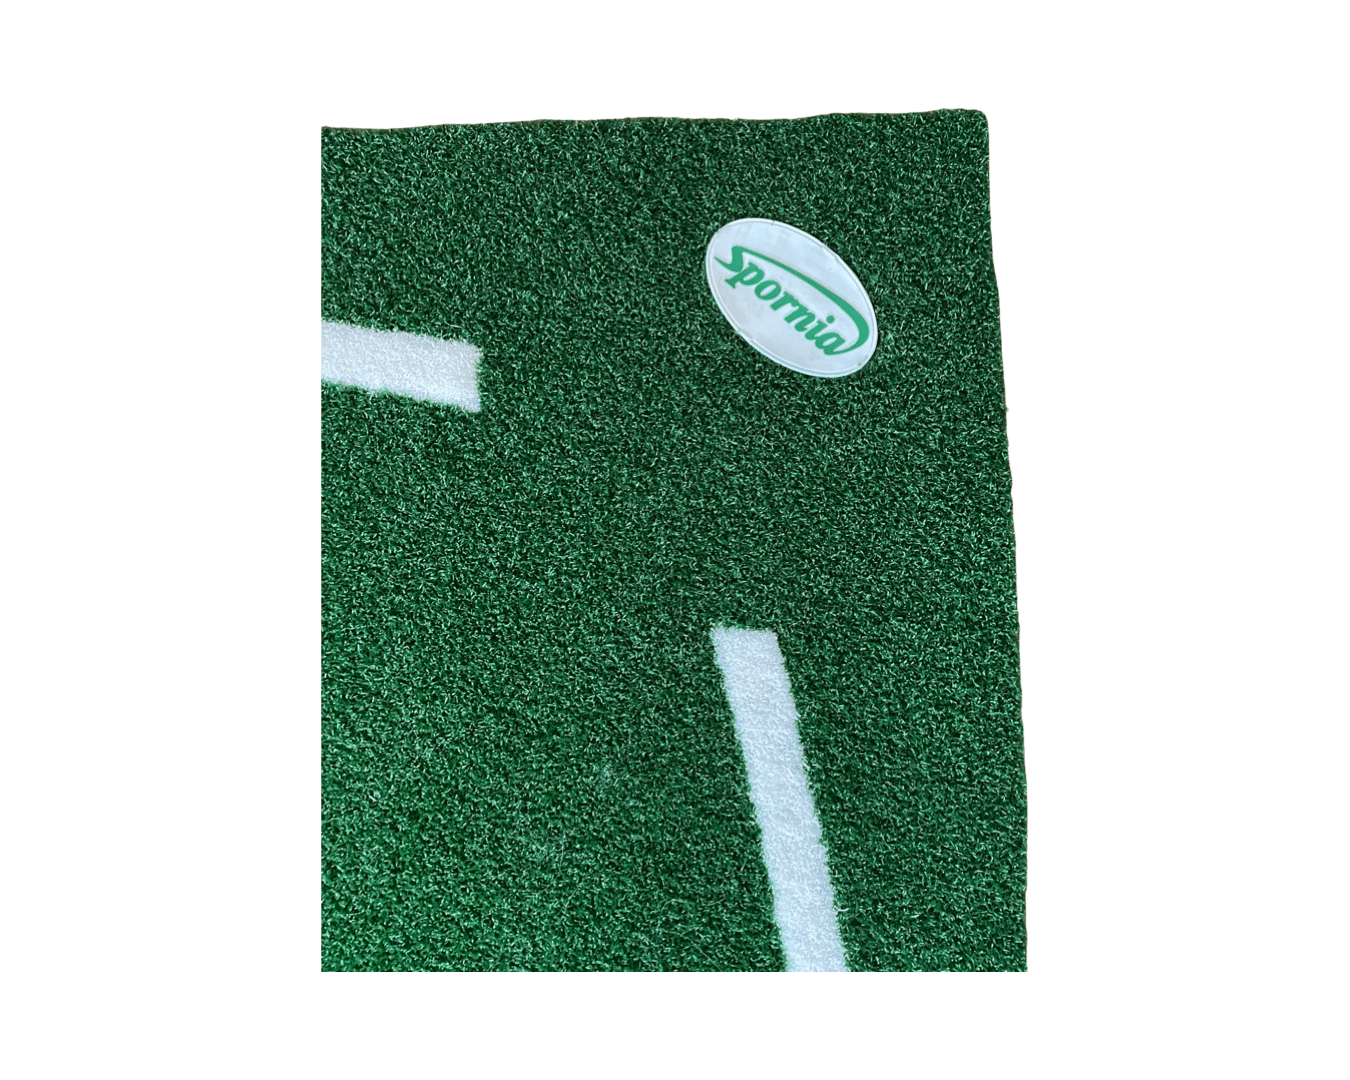 Spornia Academy Commercial Golf Mat